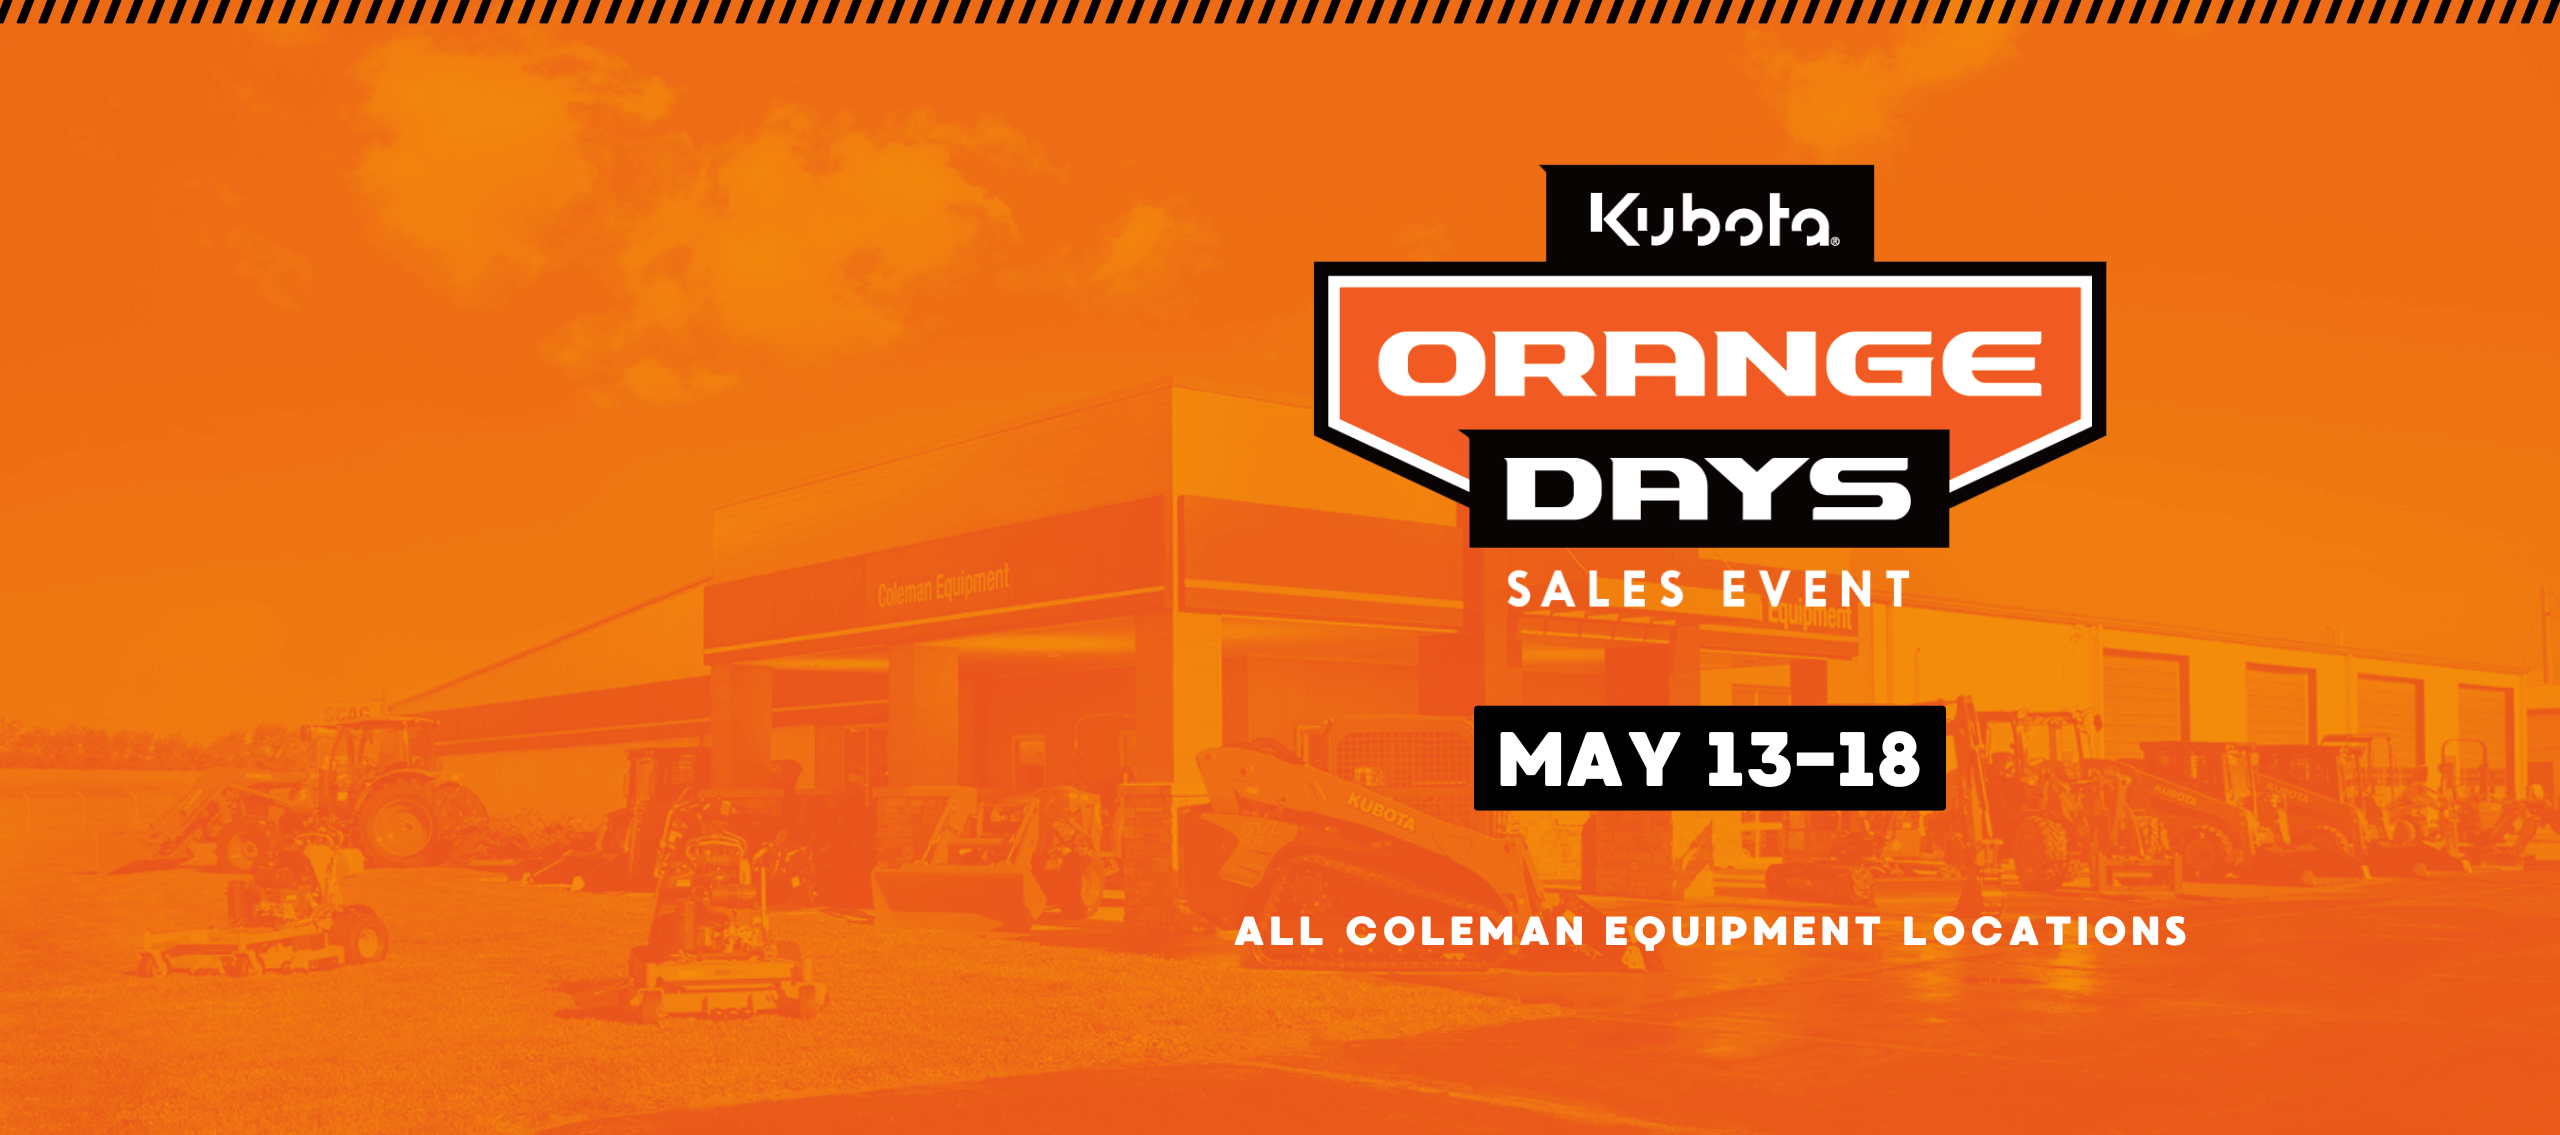 Kubota Orange Days Sales Event - May 13-18